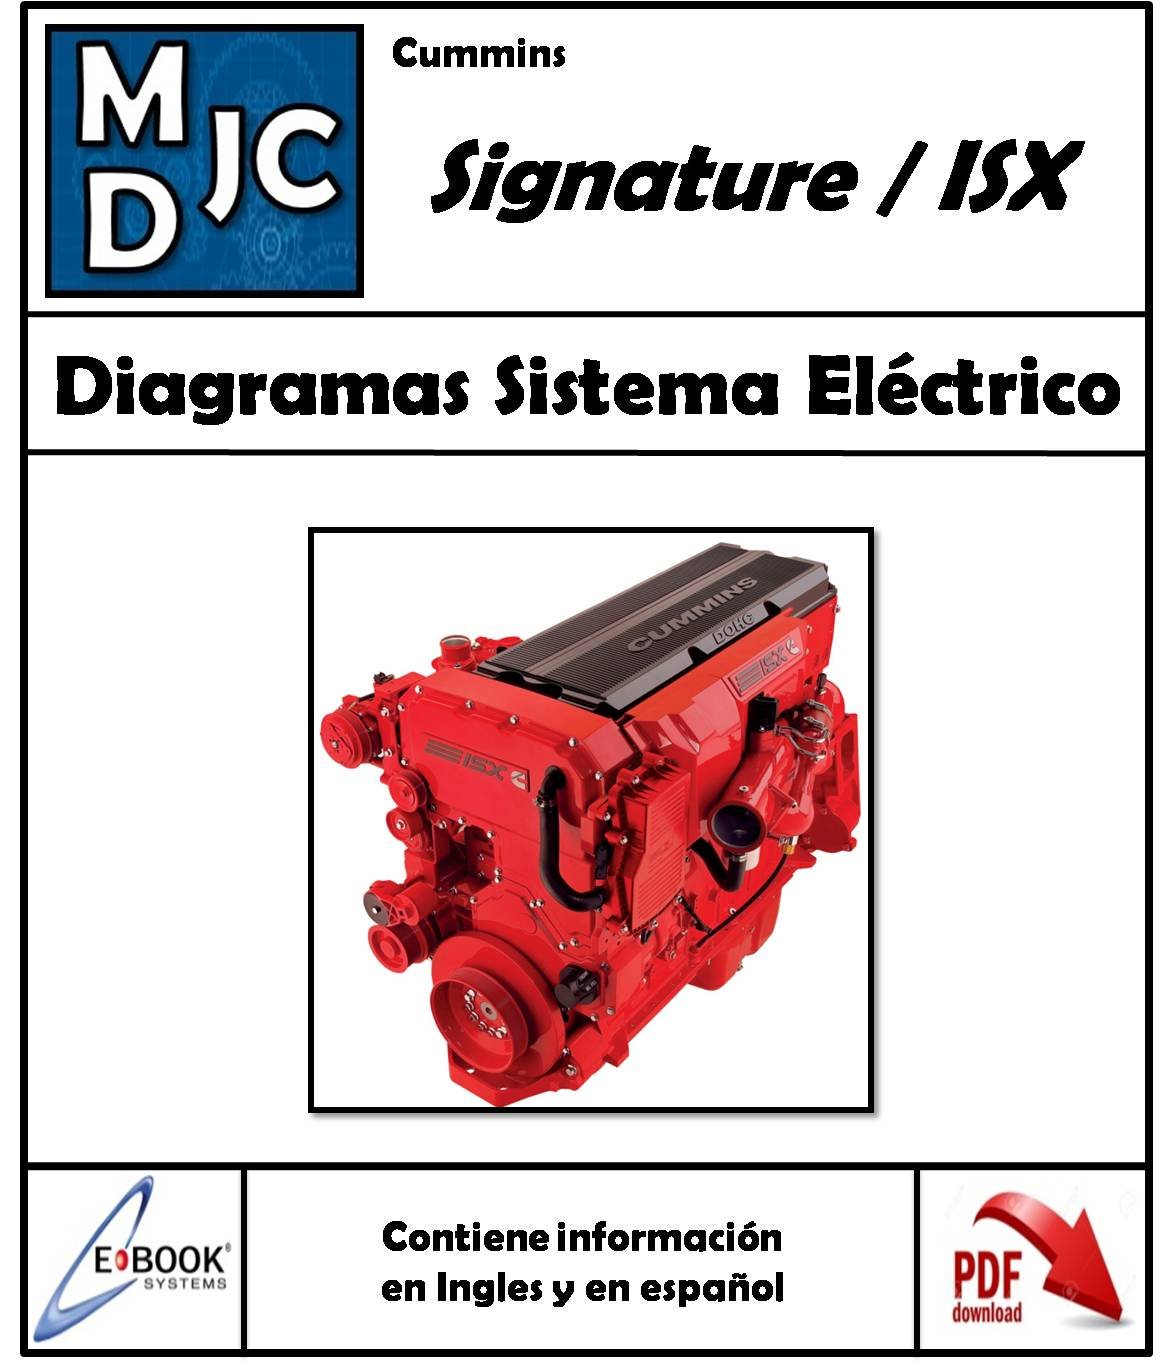 Manual Diagramas Sistema Eléctrico Cummins  Signature / ISX